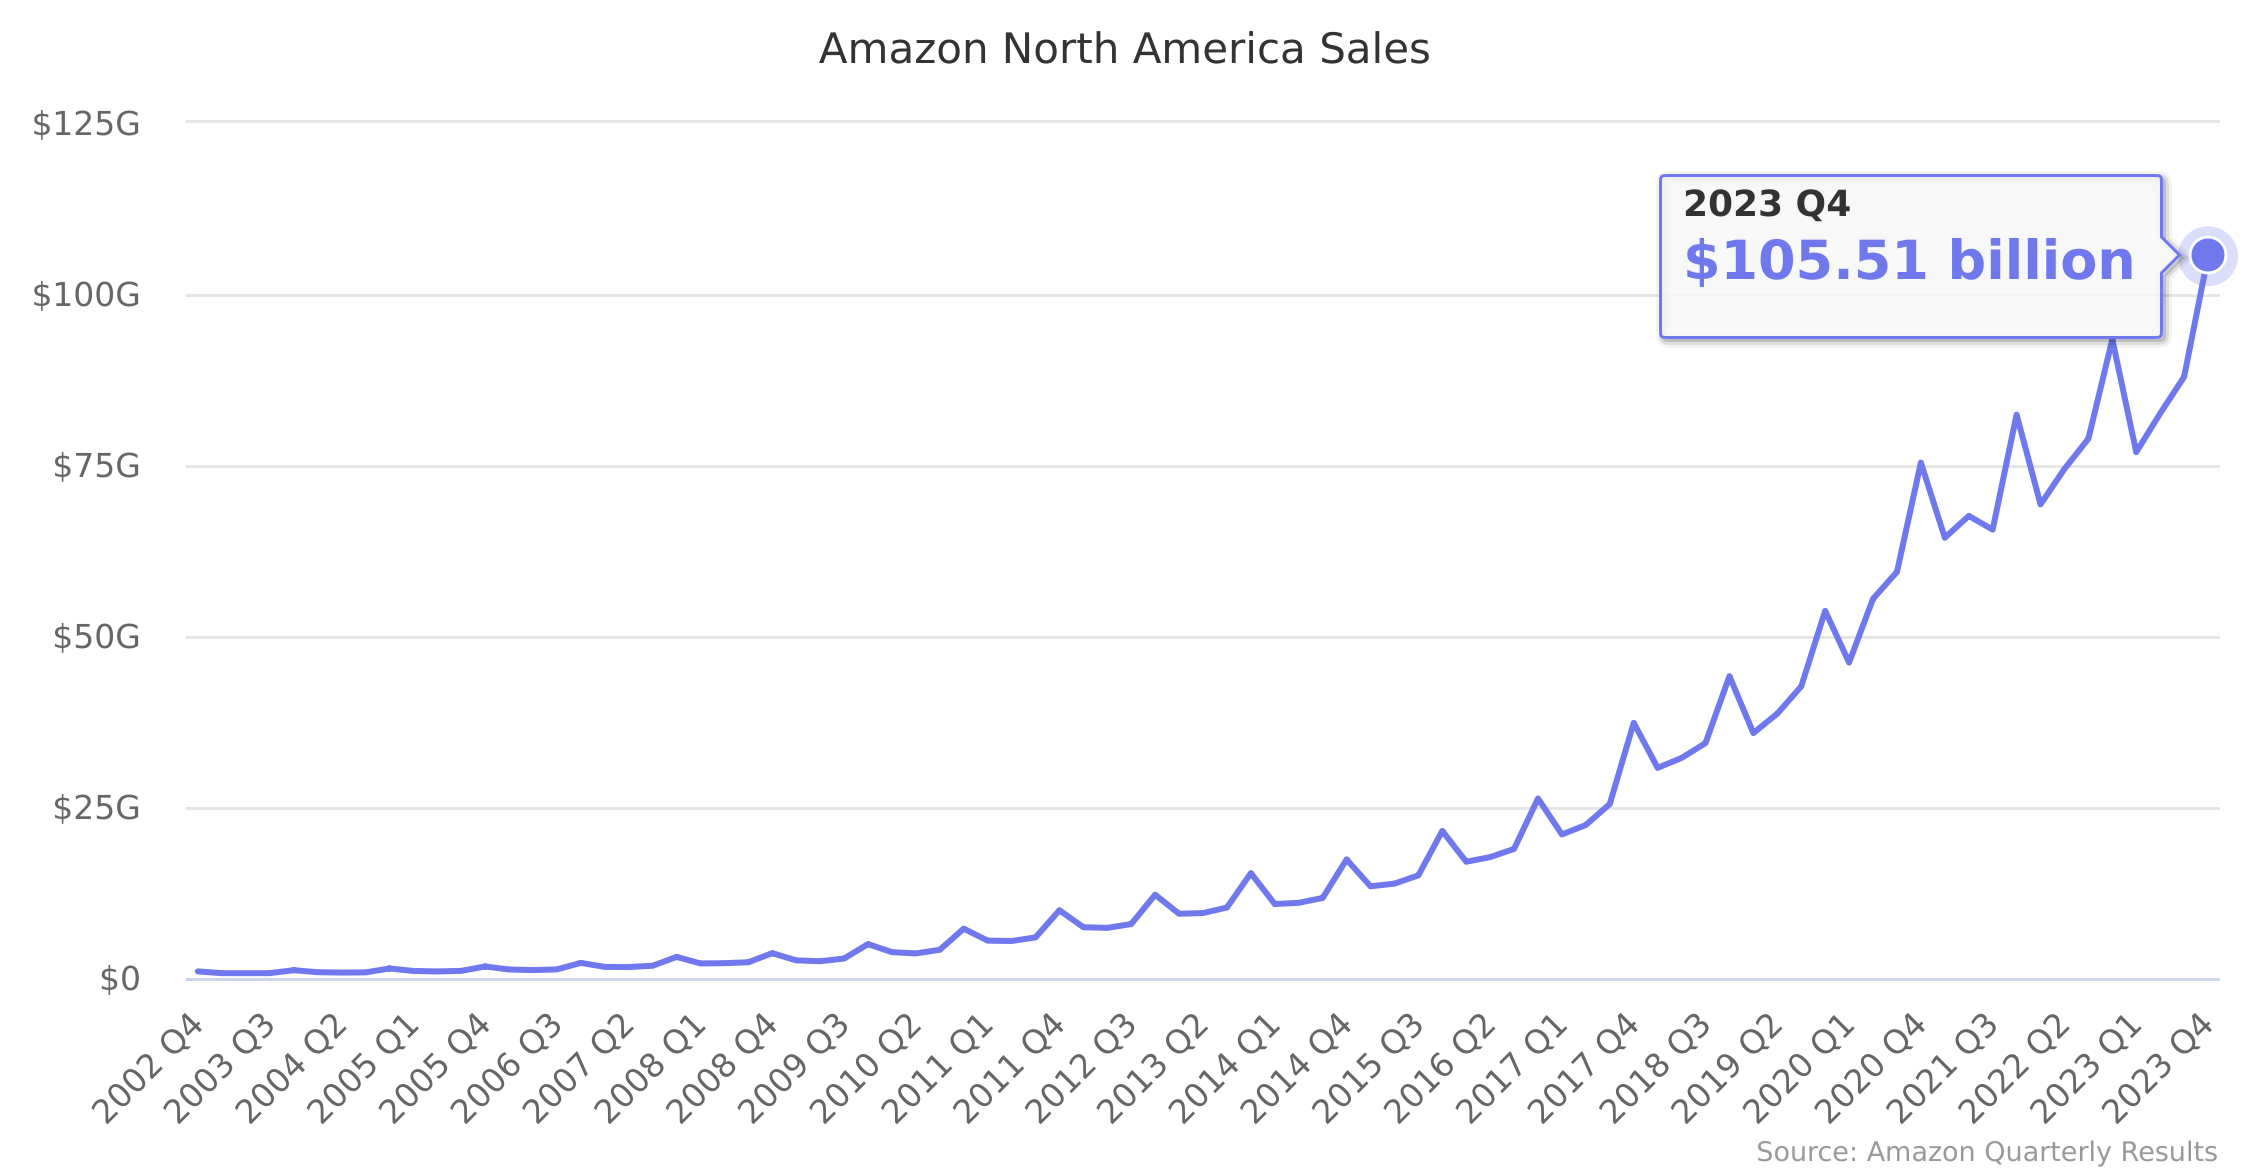 Amazon North America Sales 2002-2023